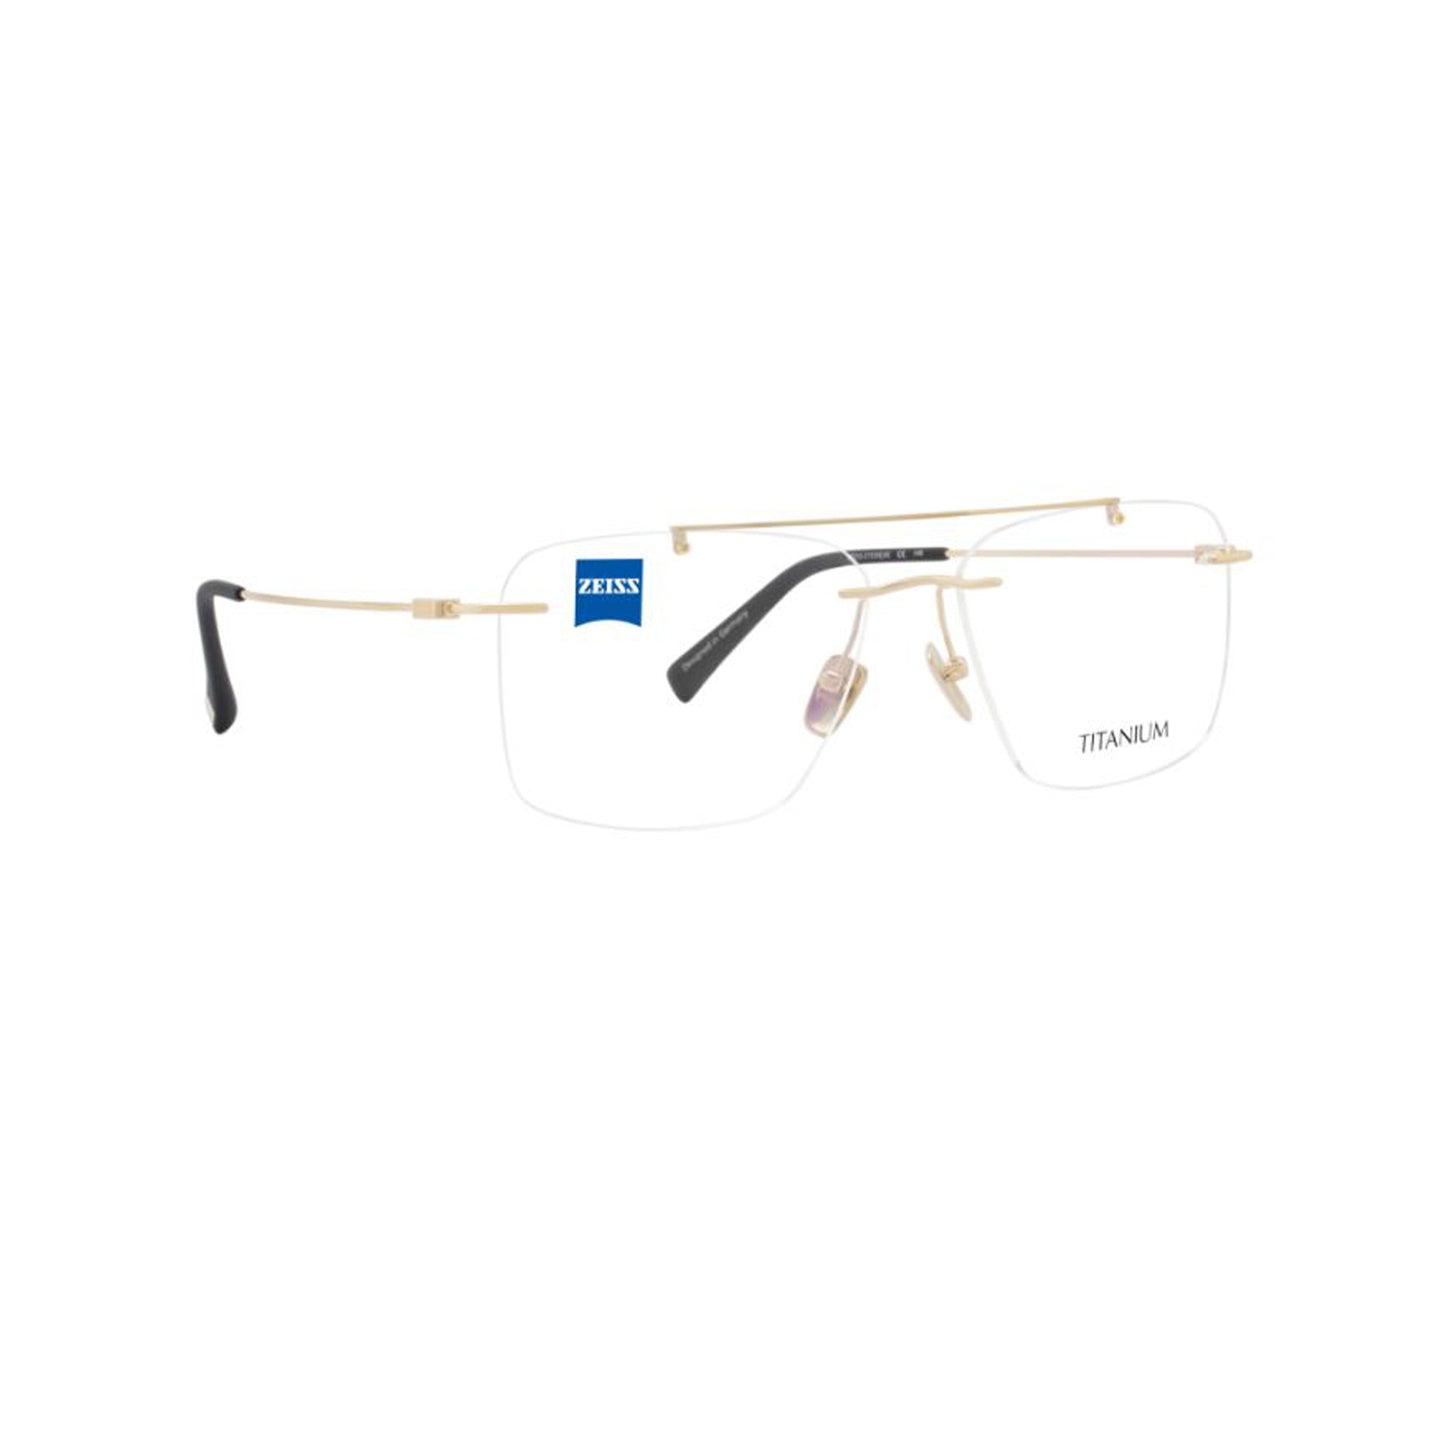 Zeiss Eyewear Gold Aviator Metal Rimless Eyeglasses. Made in Germany ZS60006-Y22